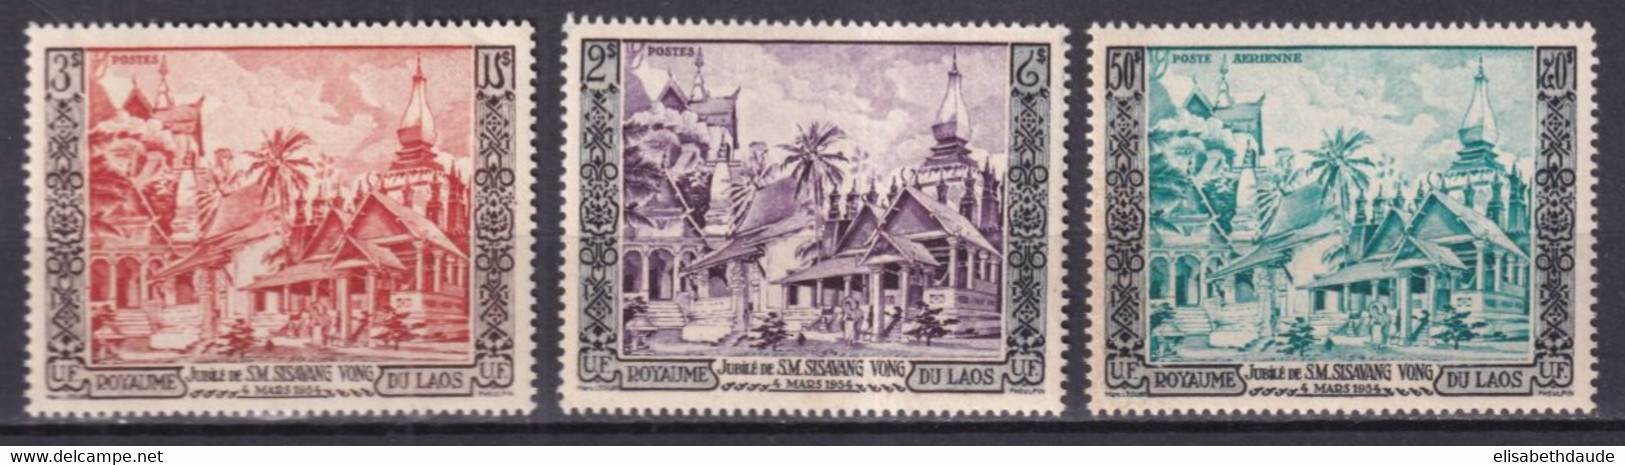 LAOS - 1954 - ANNEE COMPLETE AVEC POSTE AERIENNE YVERT N° 28/29 + PA 13 ** MNH - COTE 2006 ! = 274 EUR. - Laos